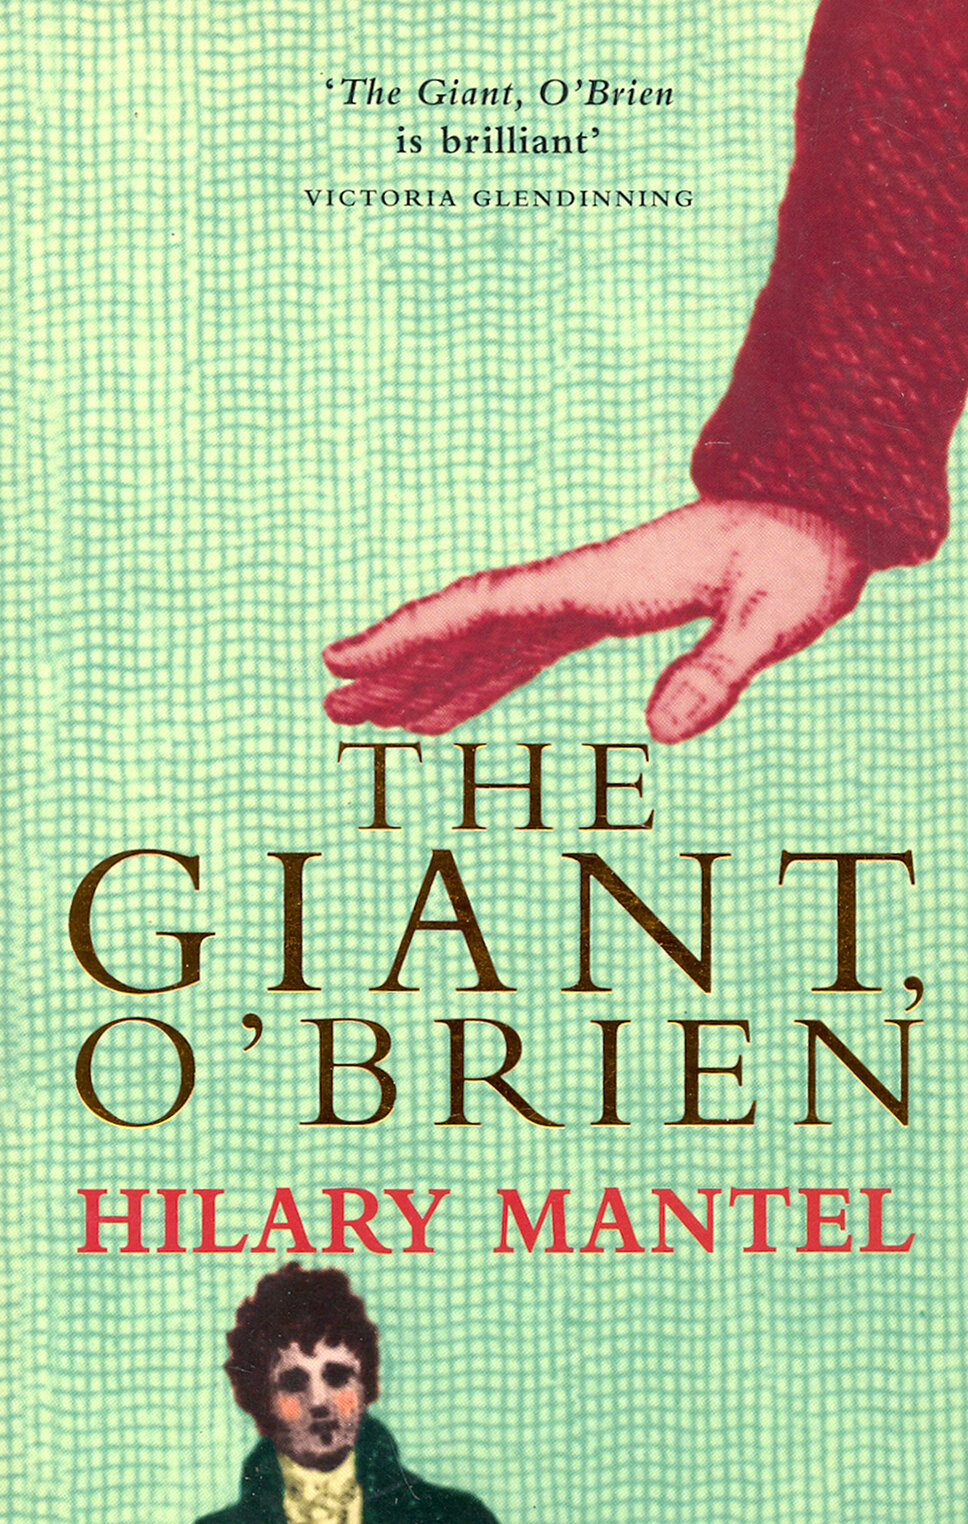 The Giant, O'Brien (Мантел Хилари) - фото №1